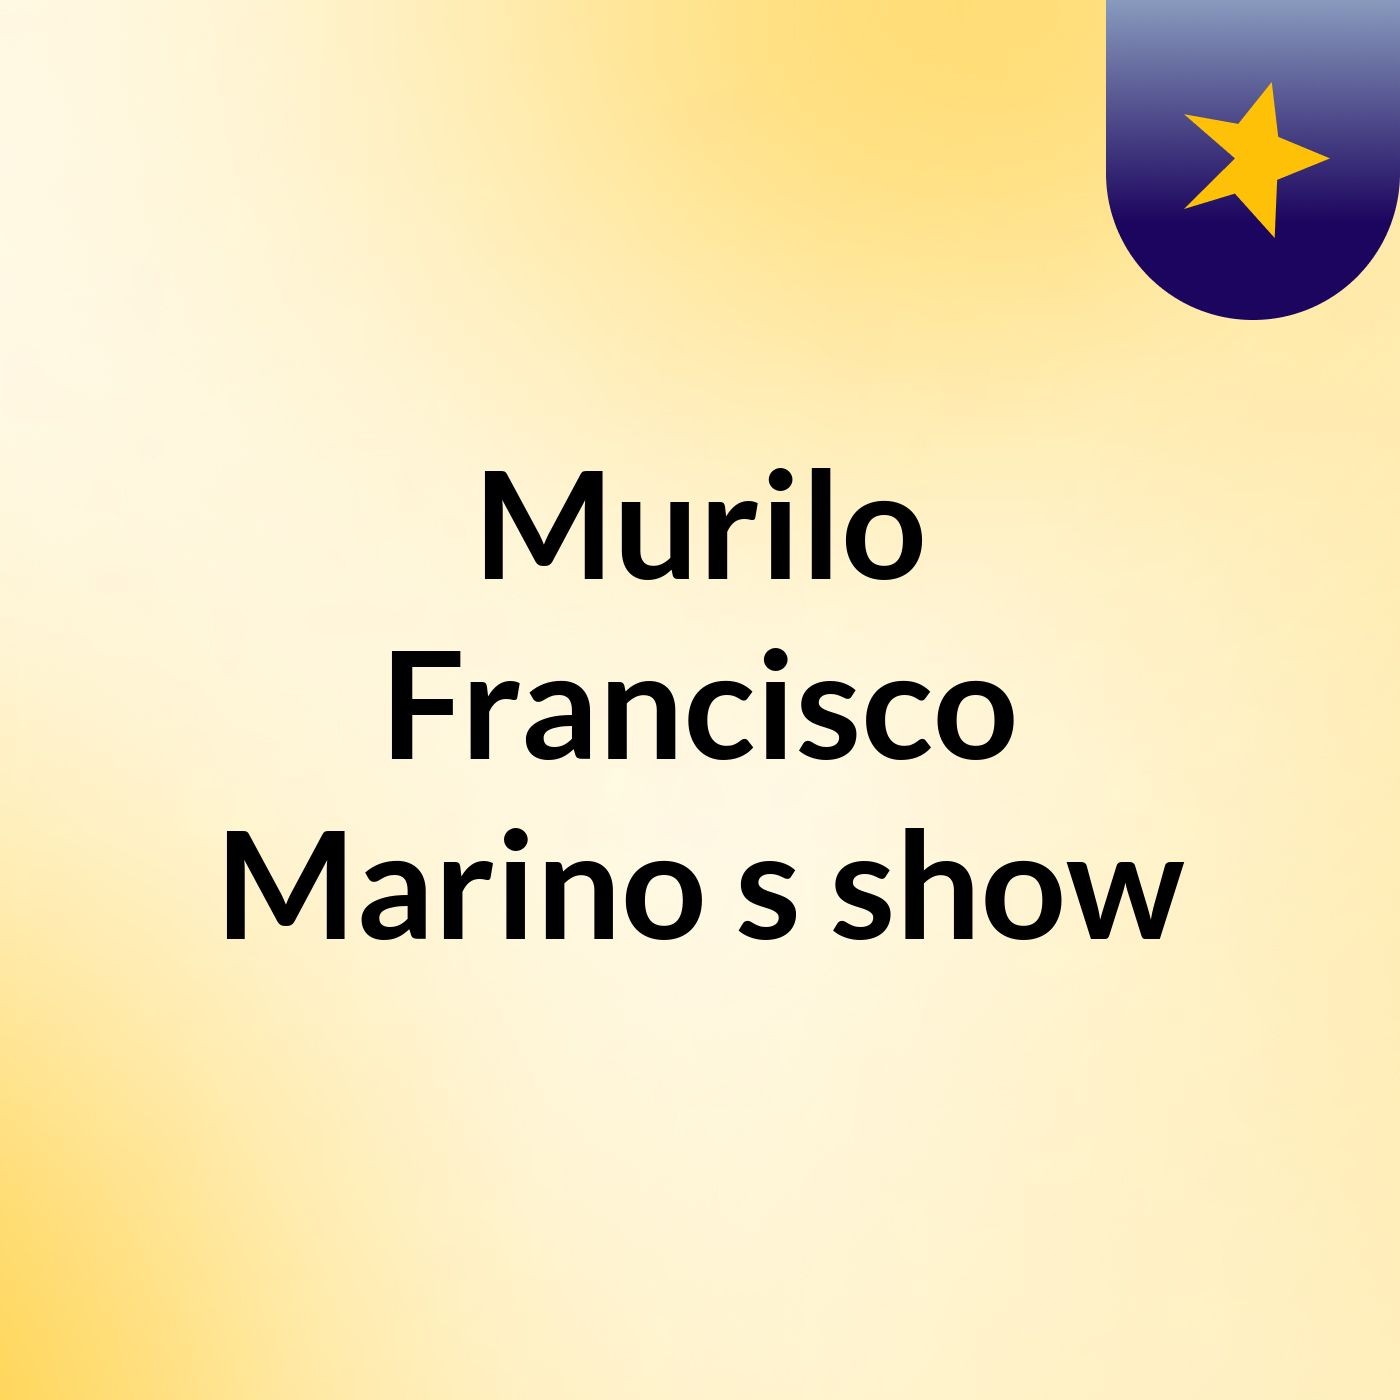 Murilo Francisco Marino's show